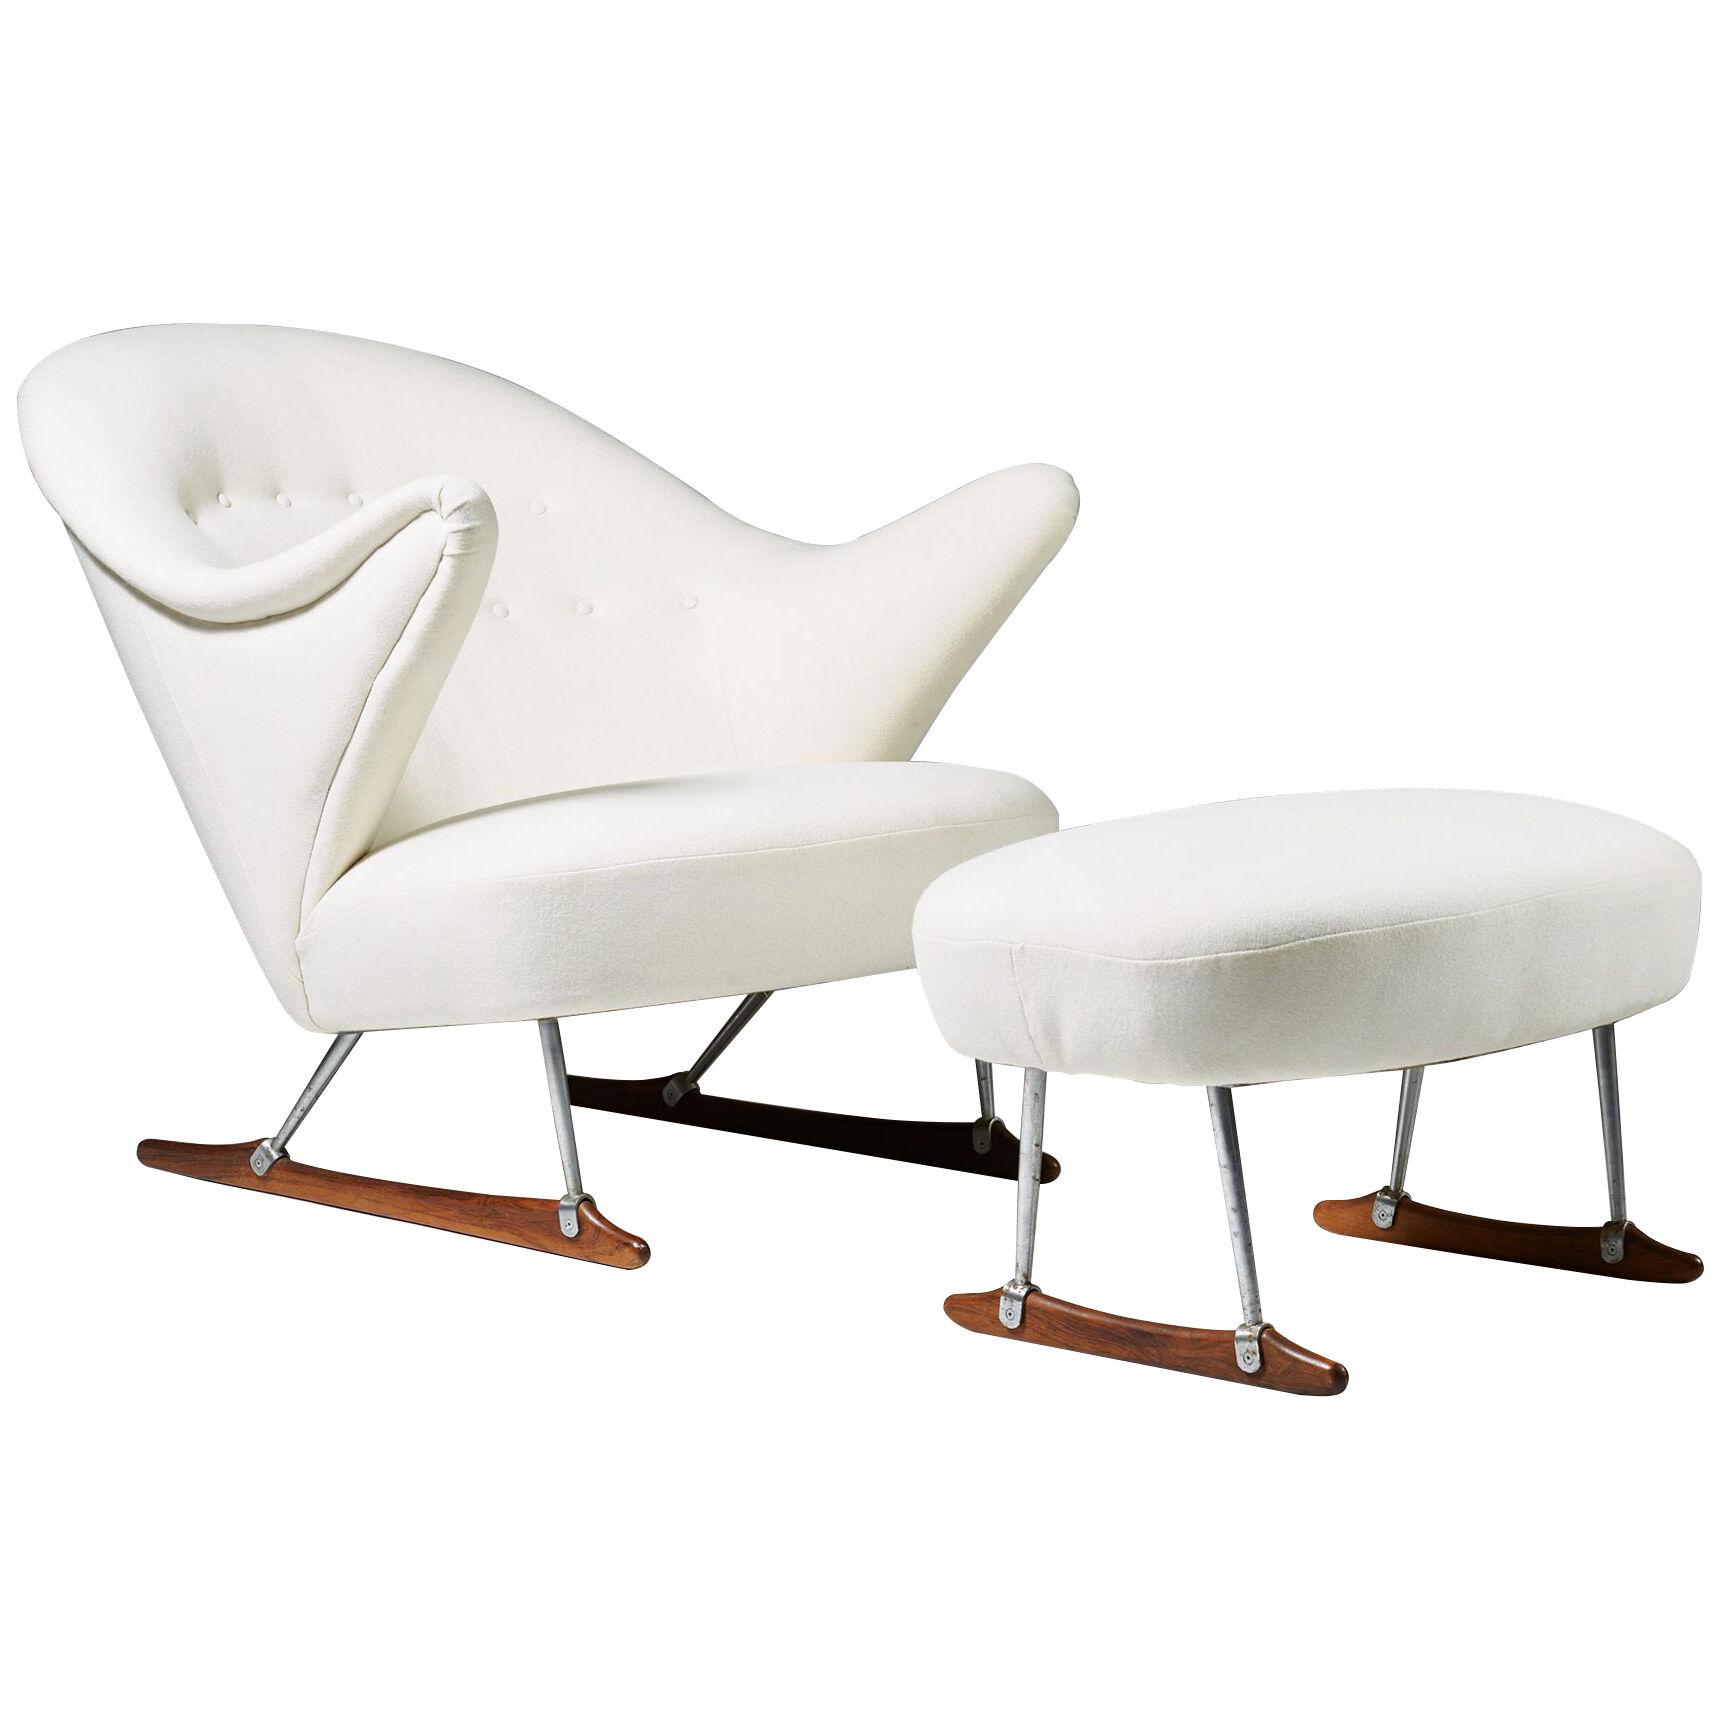 Sleigh chair designed by Börge Mogensen for Tage M Christensen & Co,